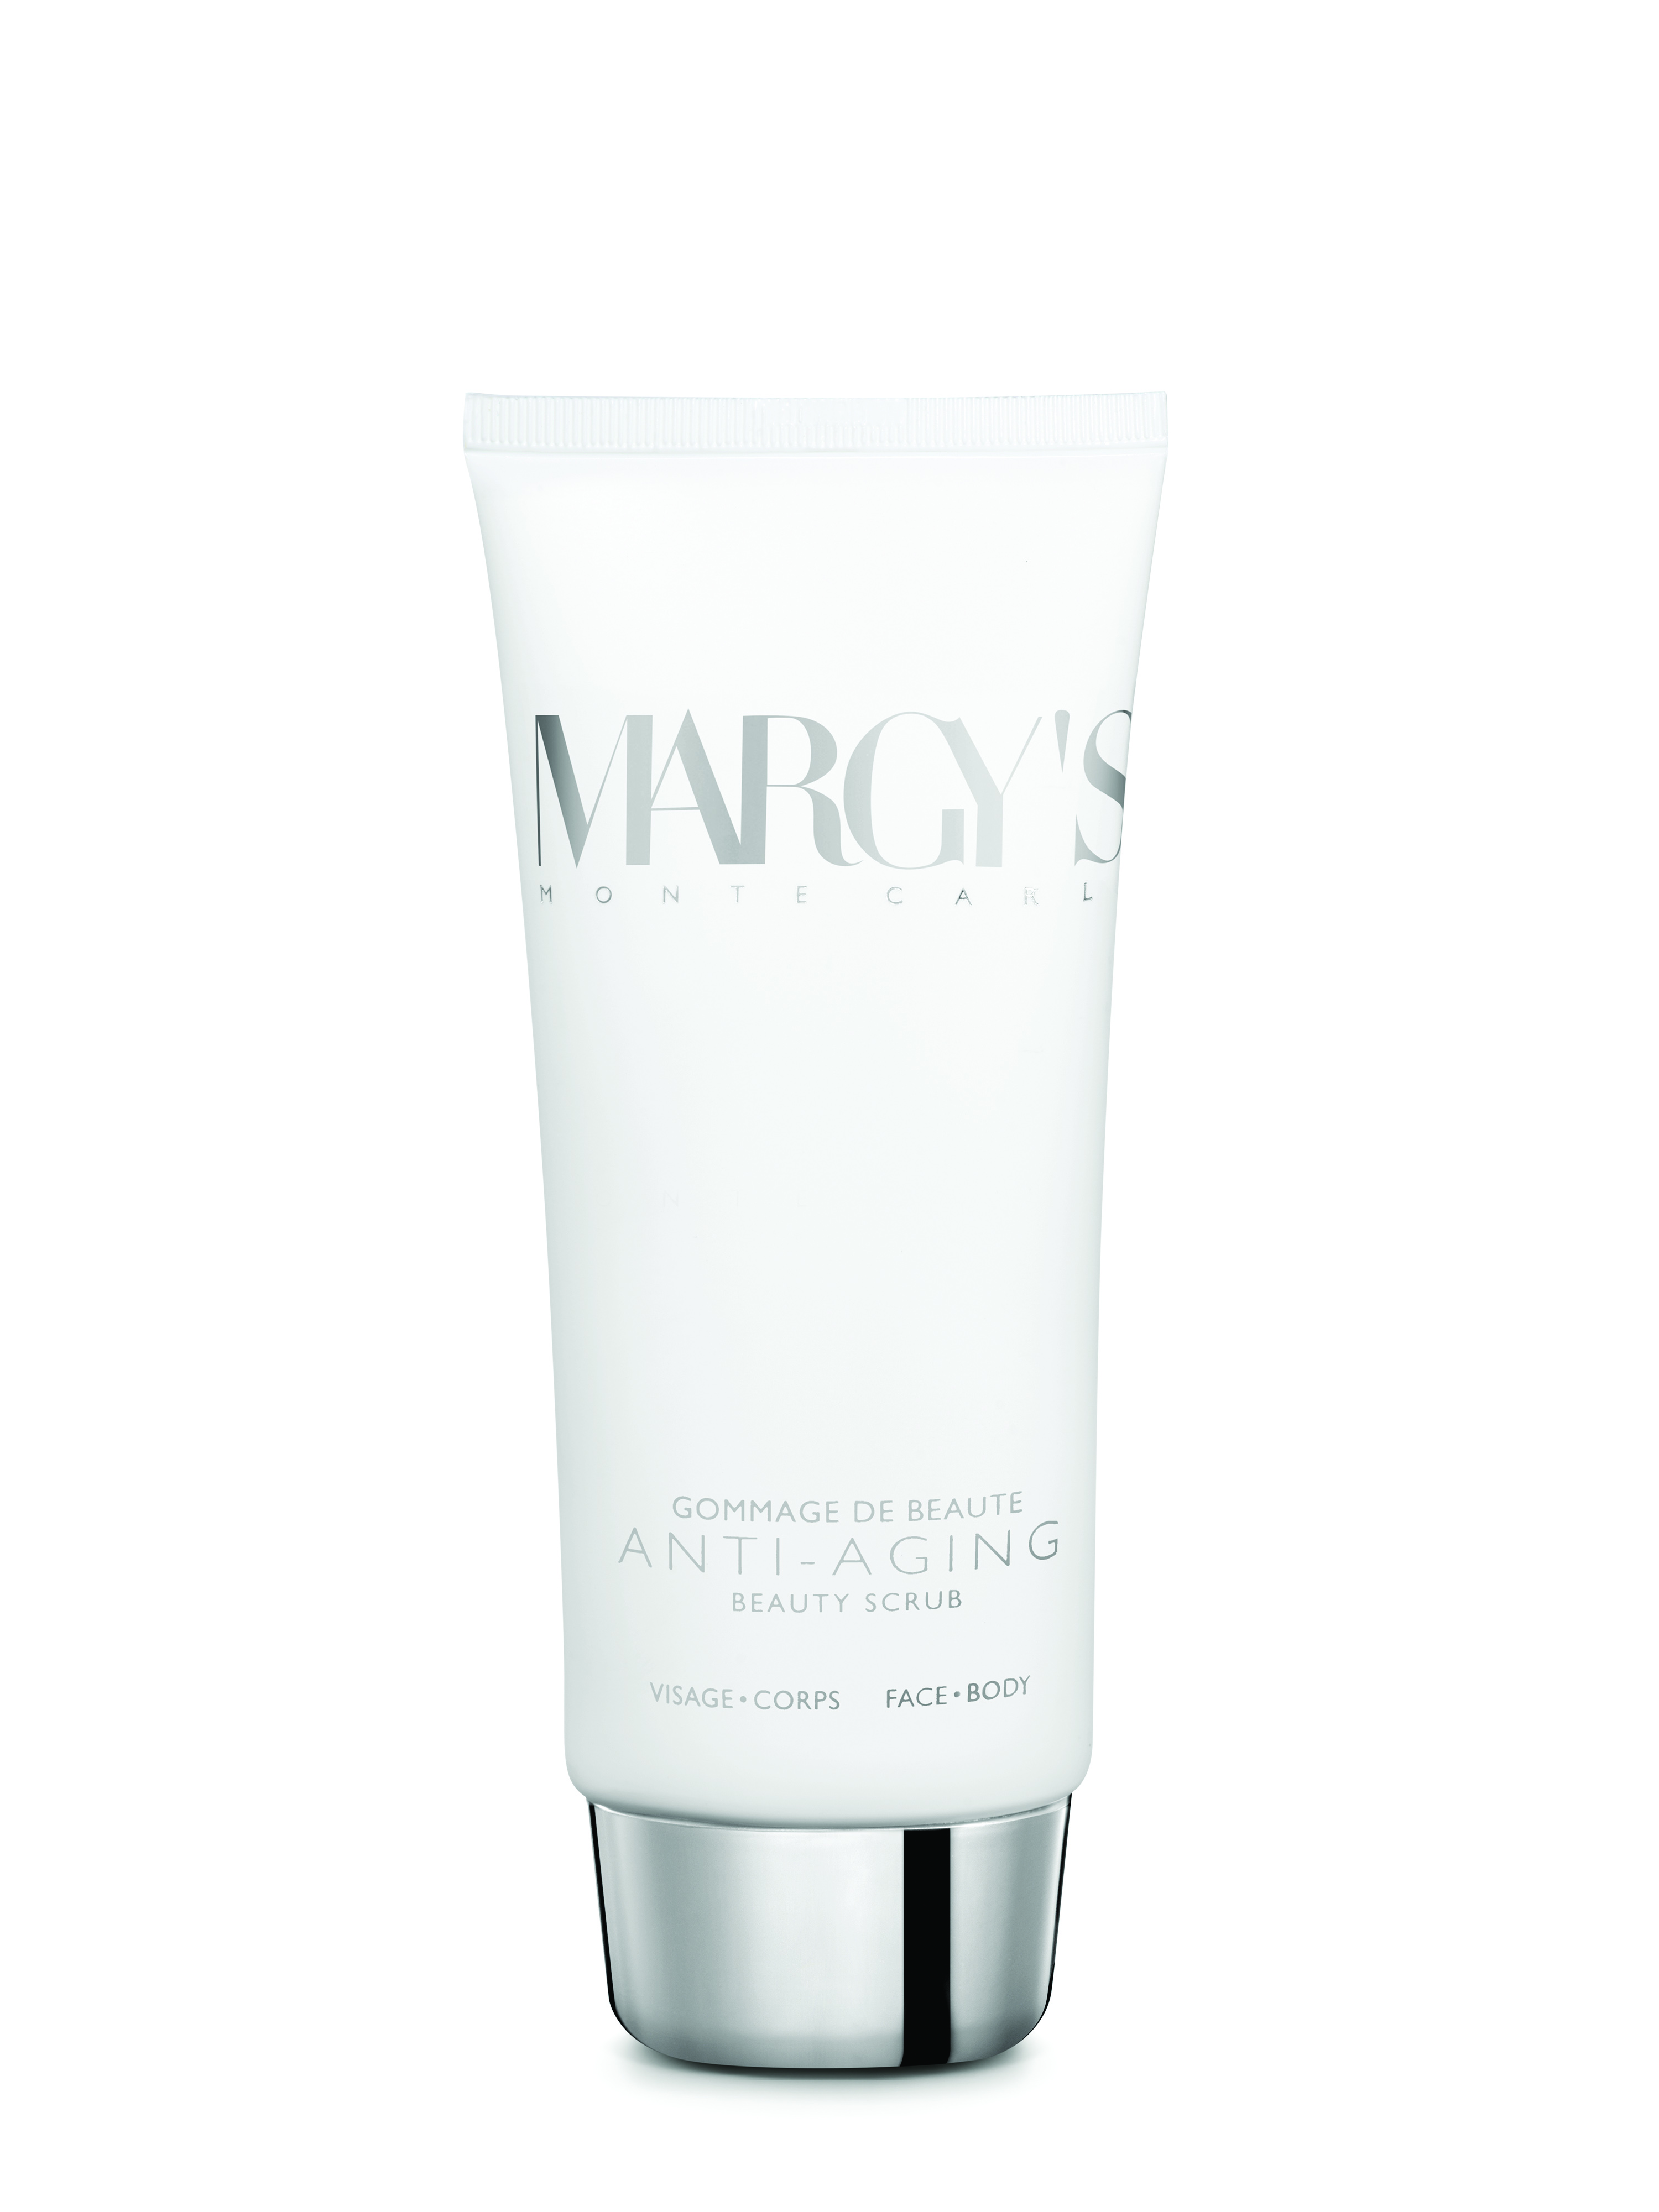 Margys. Beauty Scrub - body & face Margy's Monte Carlo. Margys маска для лица. Beauty скраб. Margy's Monte Carlo.